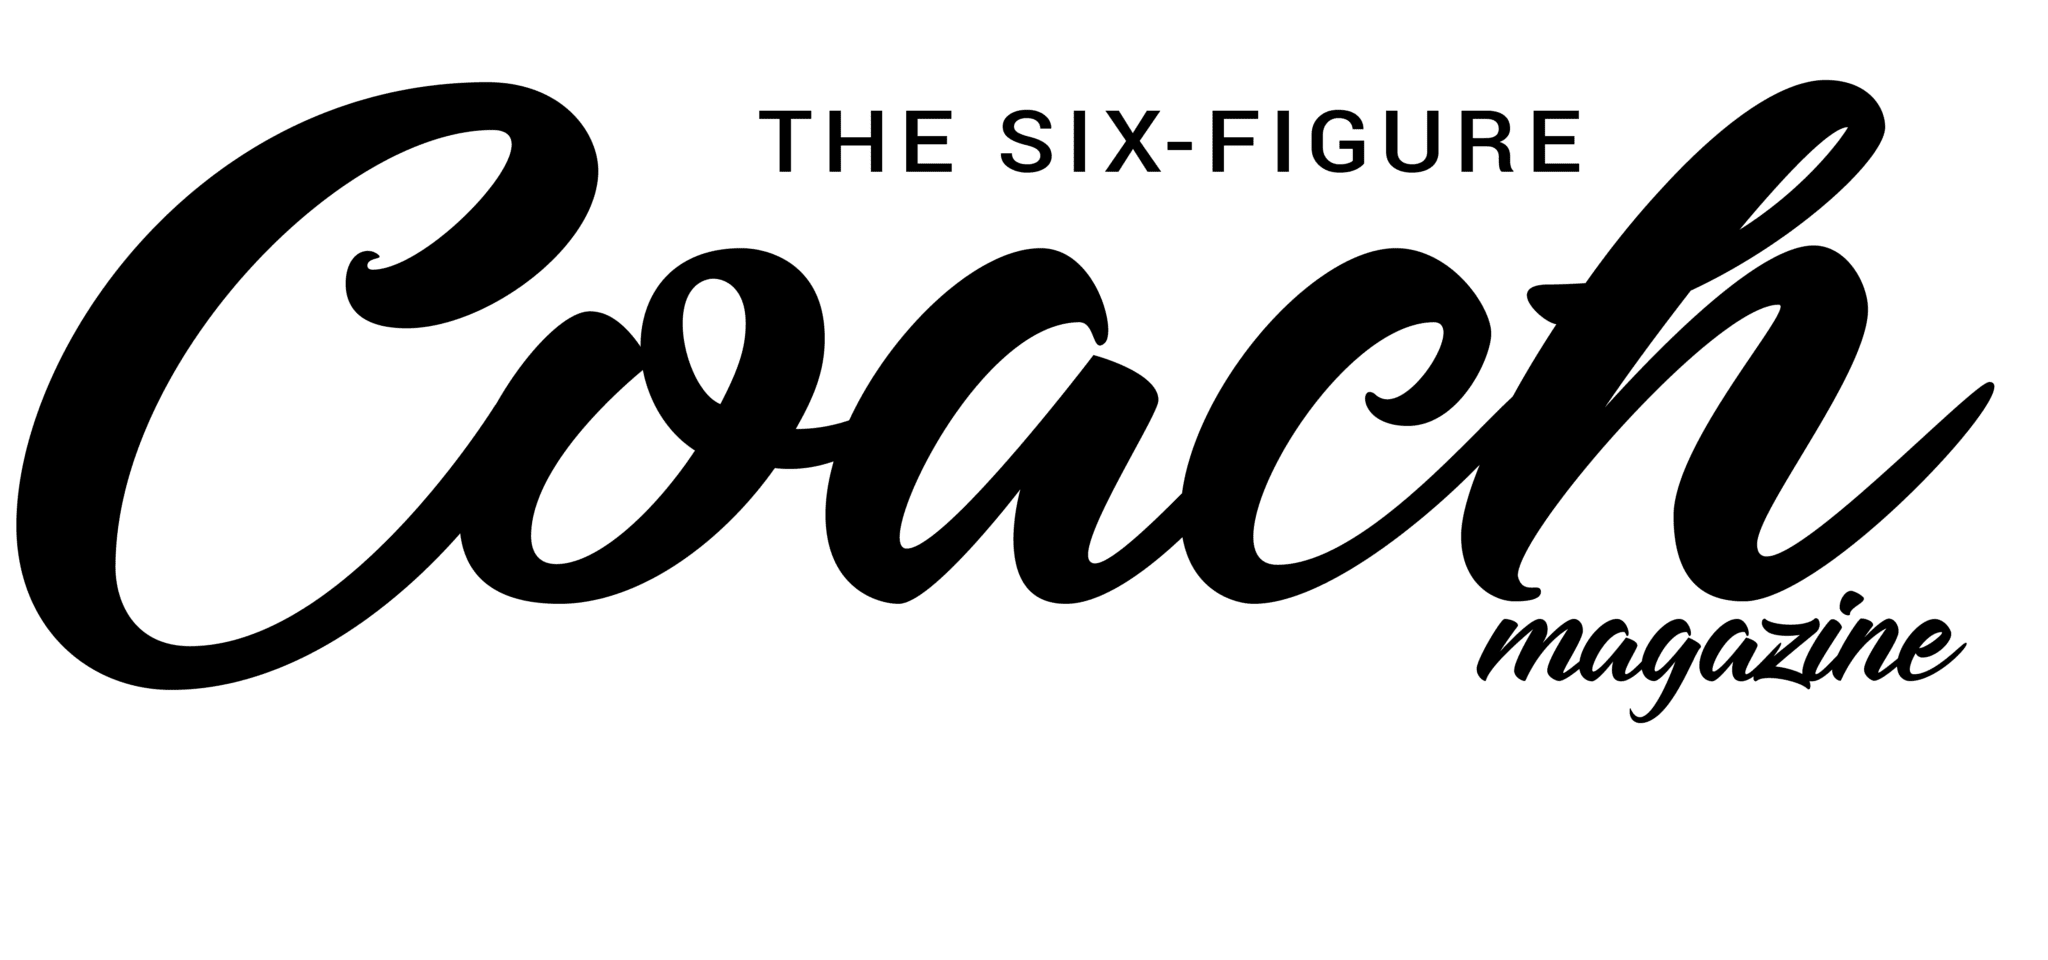 The Six-Figure Coach